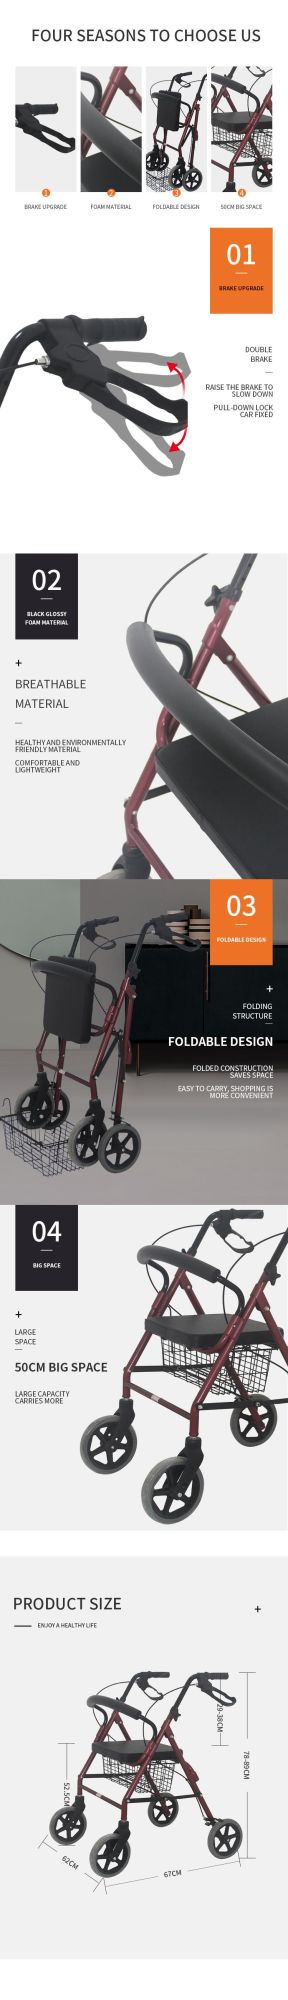 Disabled Walking Frames 4 Wheels Rollator Walker with Seat for Elderly